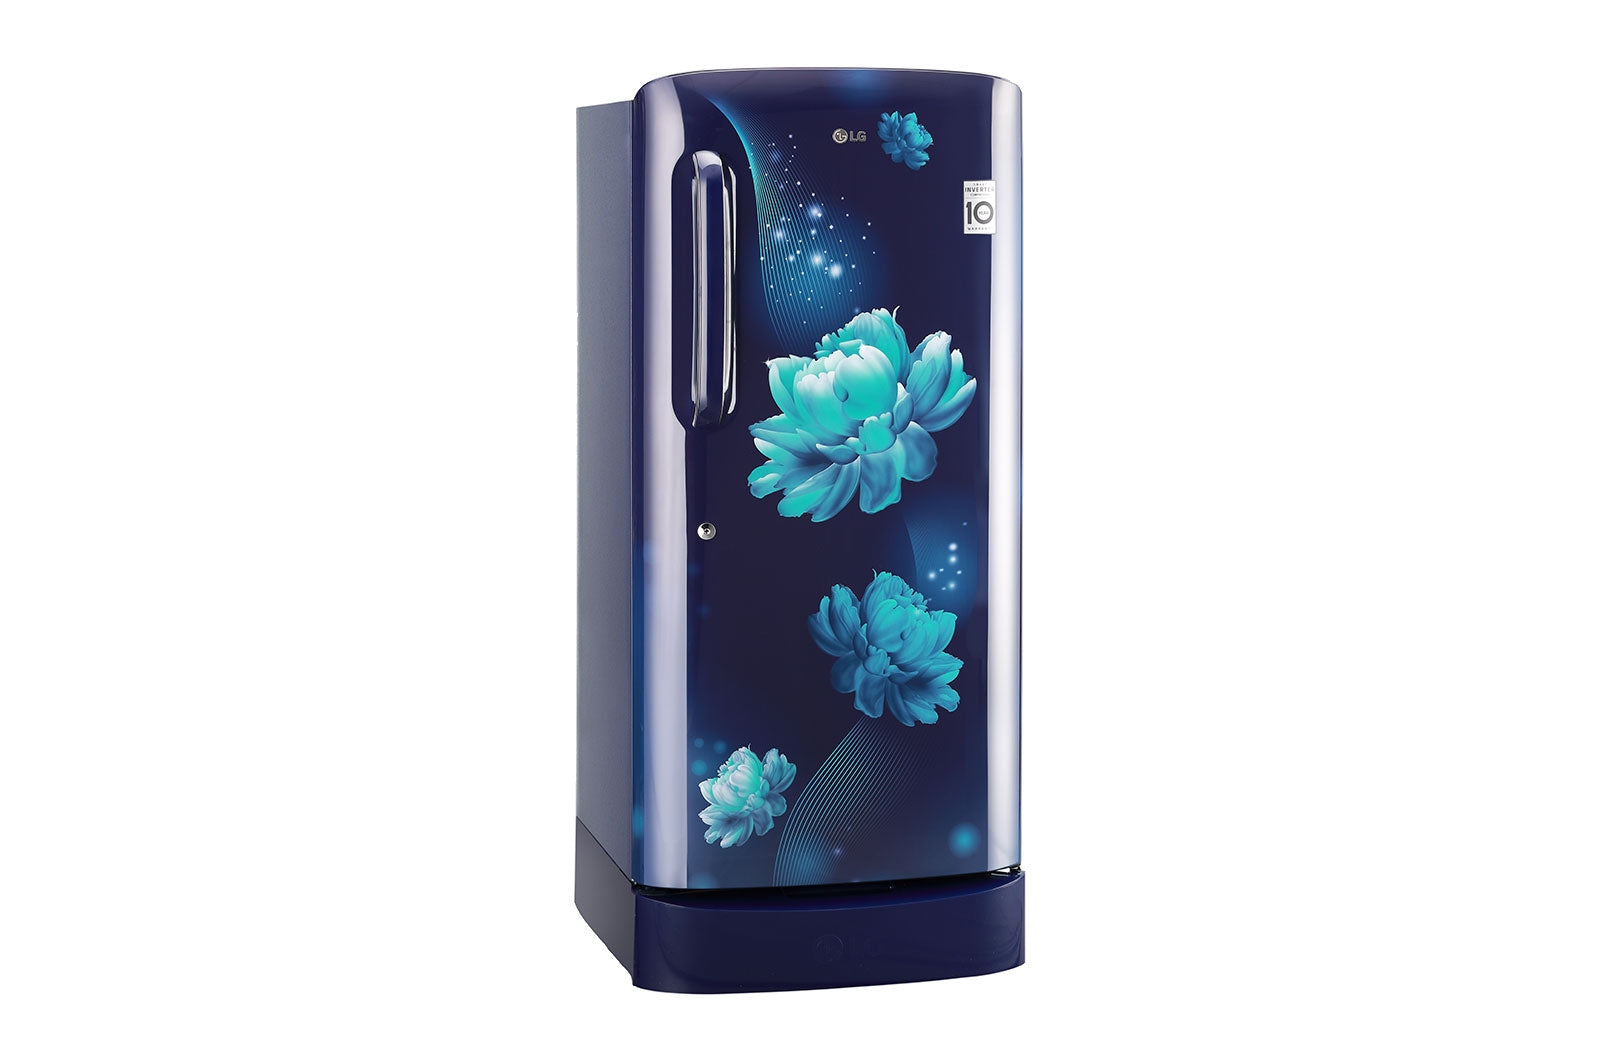 LG 215 L Single Door Refrigerator with Smart Inverter Compressor